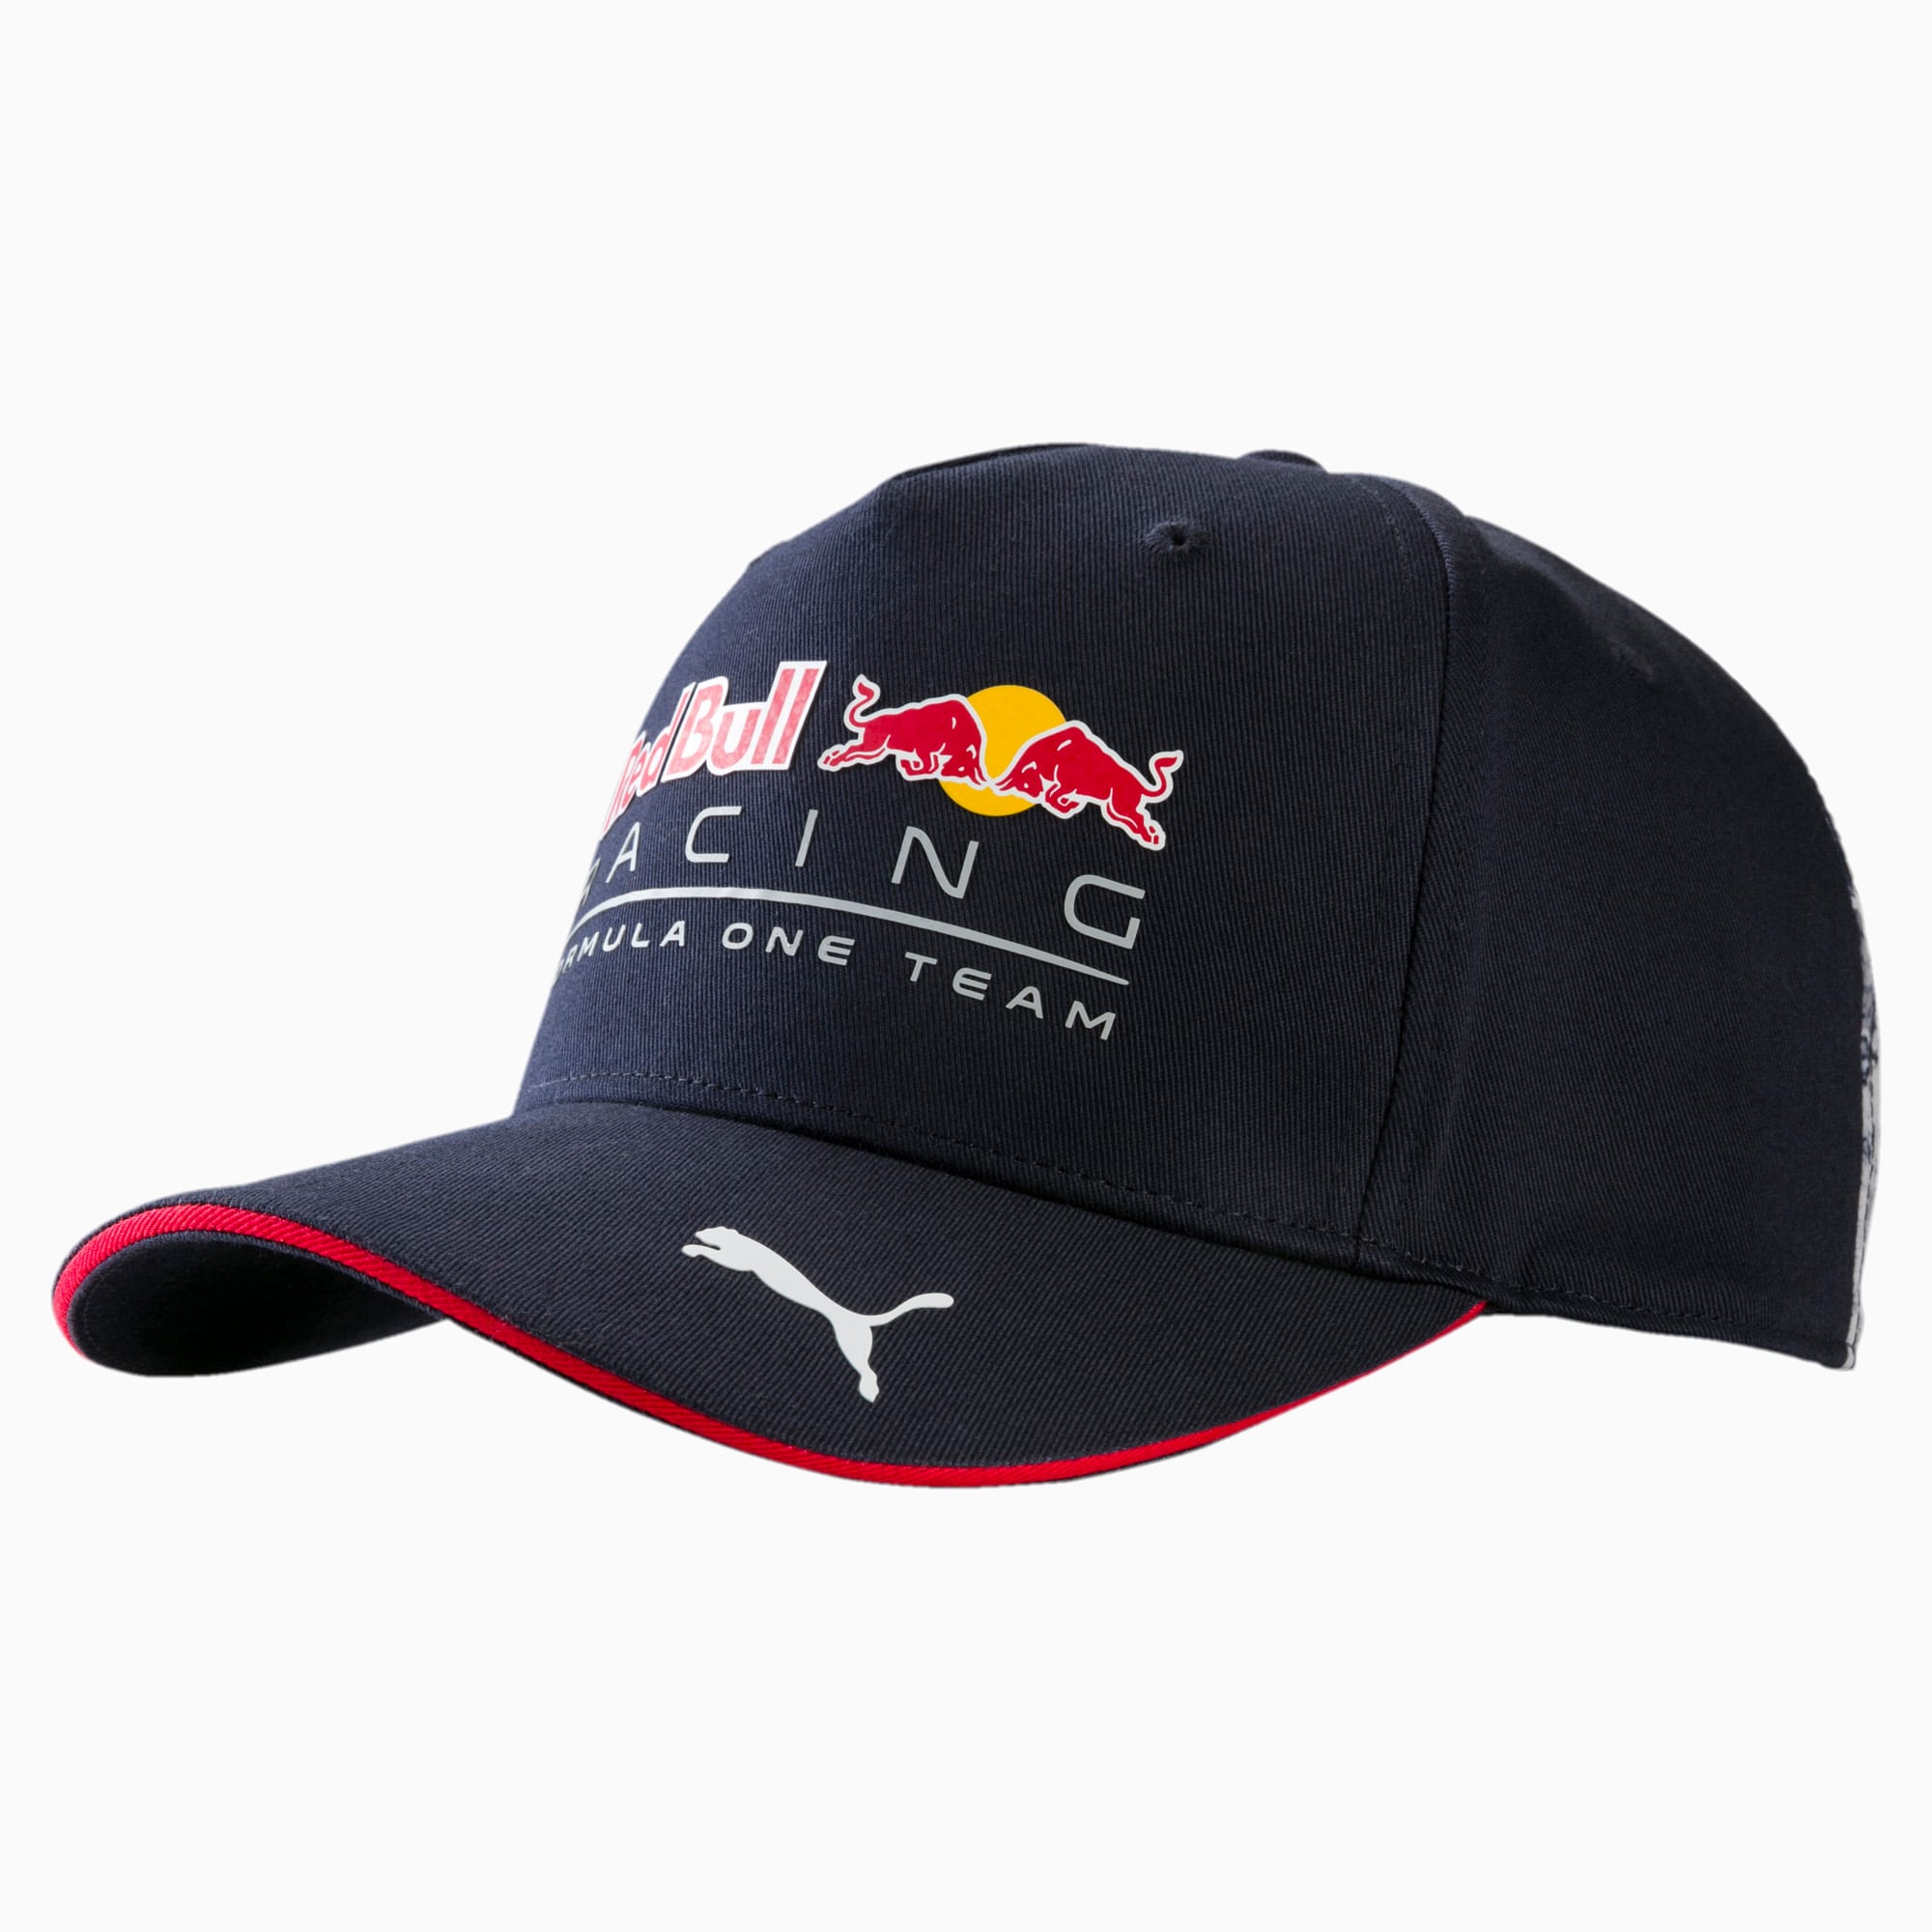 Red Bull Racing レプリカ チームギア キャップ